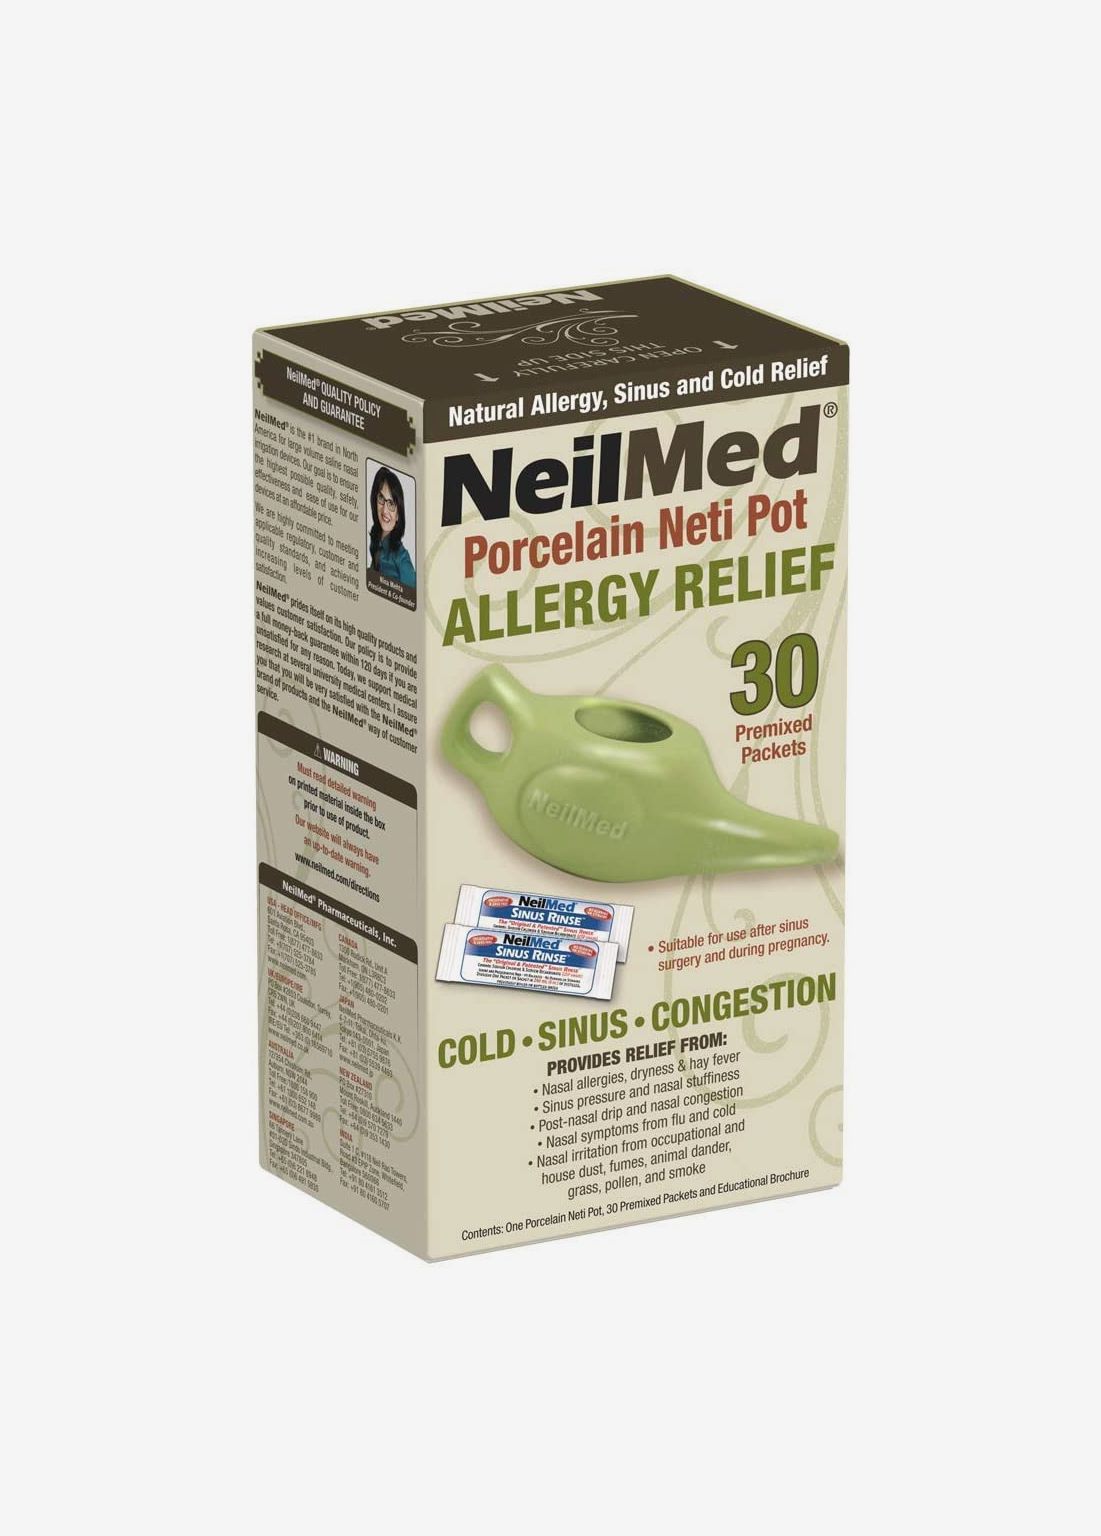 Posional 300ml Nasal Rinsing Nose Wash System Neti Pot for Allergic Rhinitis